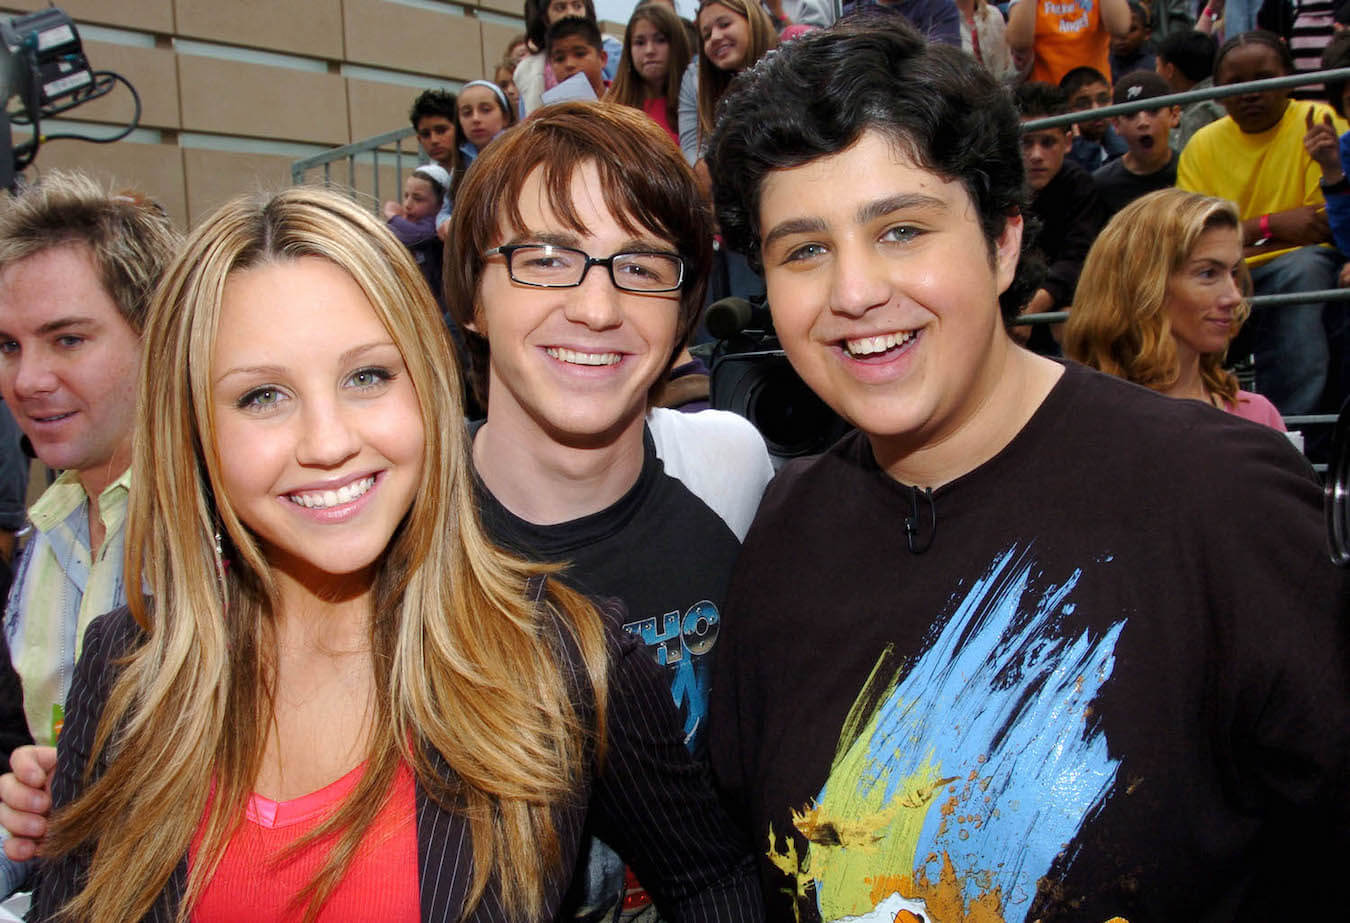 Nickelodeon stars Amanda Bynes, Drake Bell, and Josh Peck smiling together